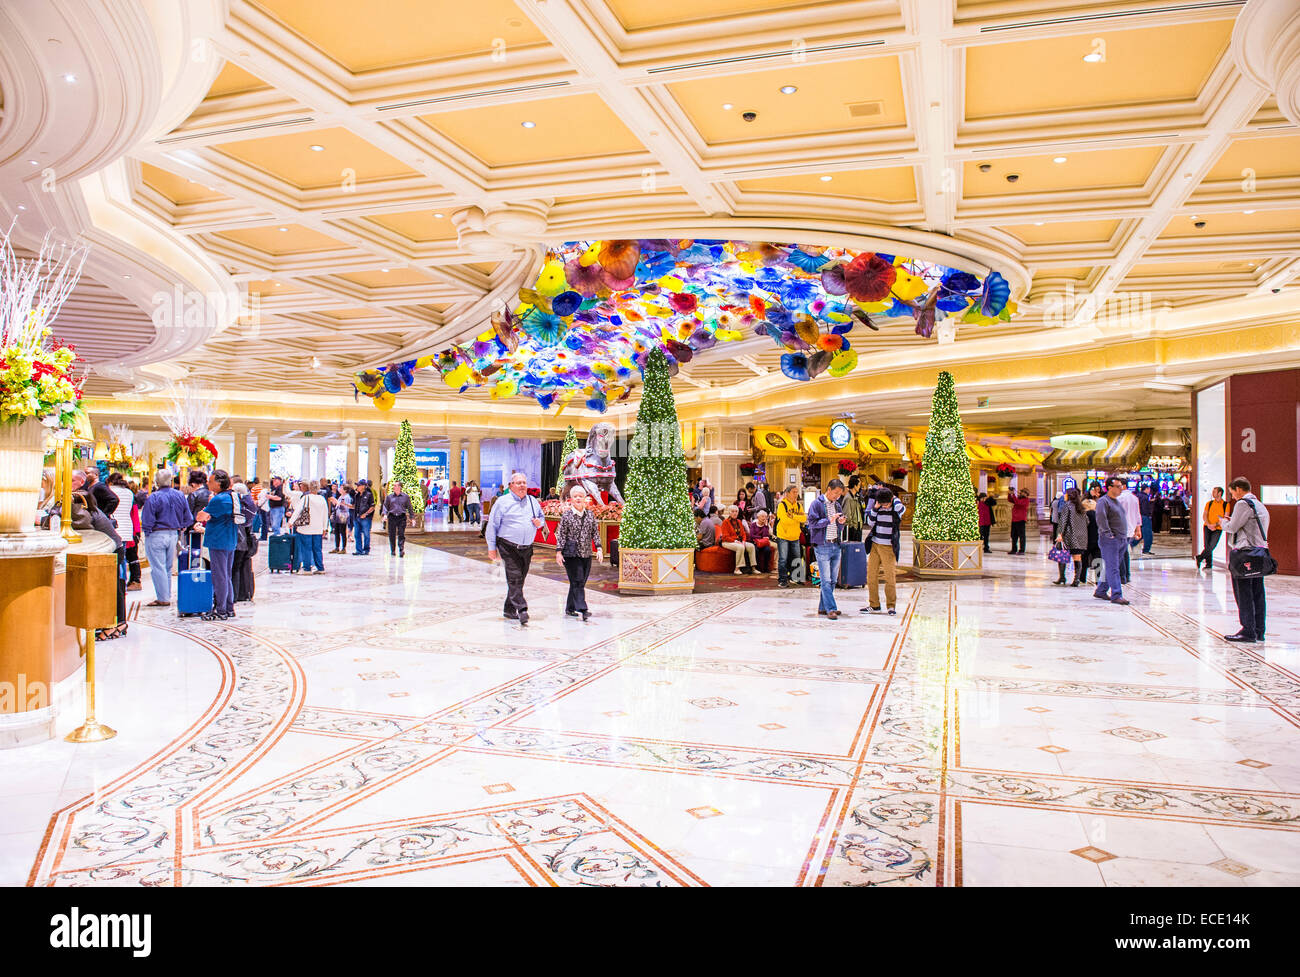 The interior of Bellagio hotel and casino in Las Vegas. Stock Photo